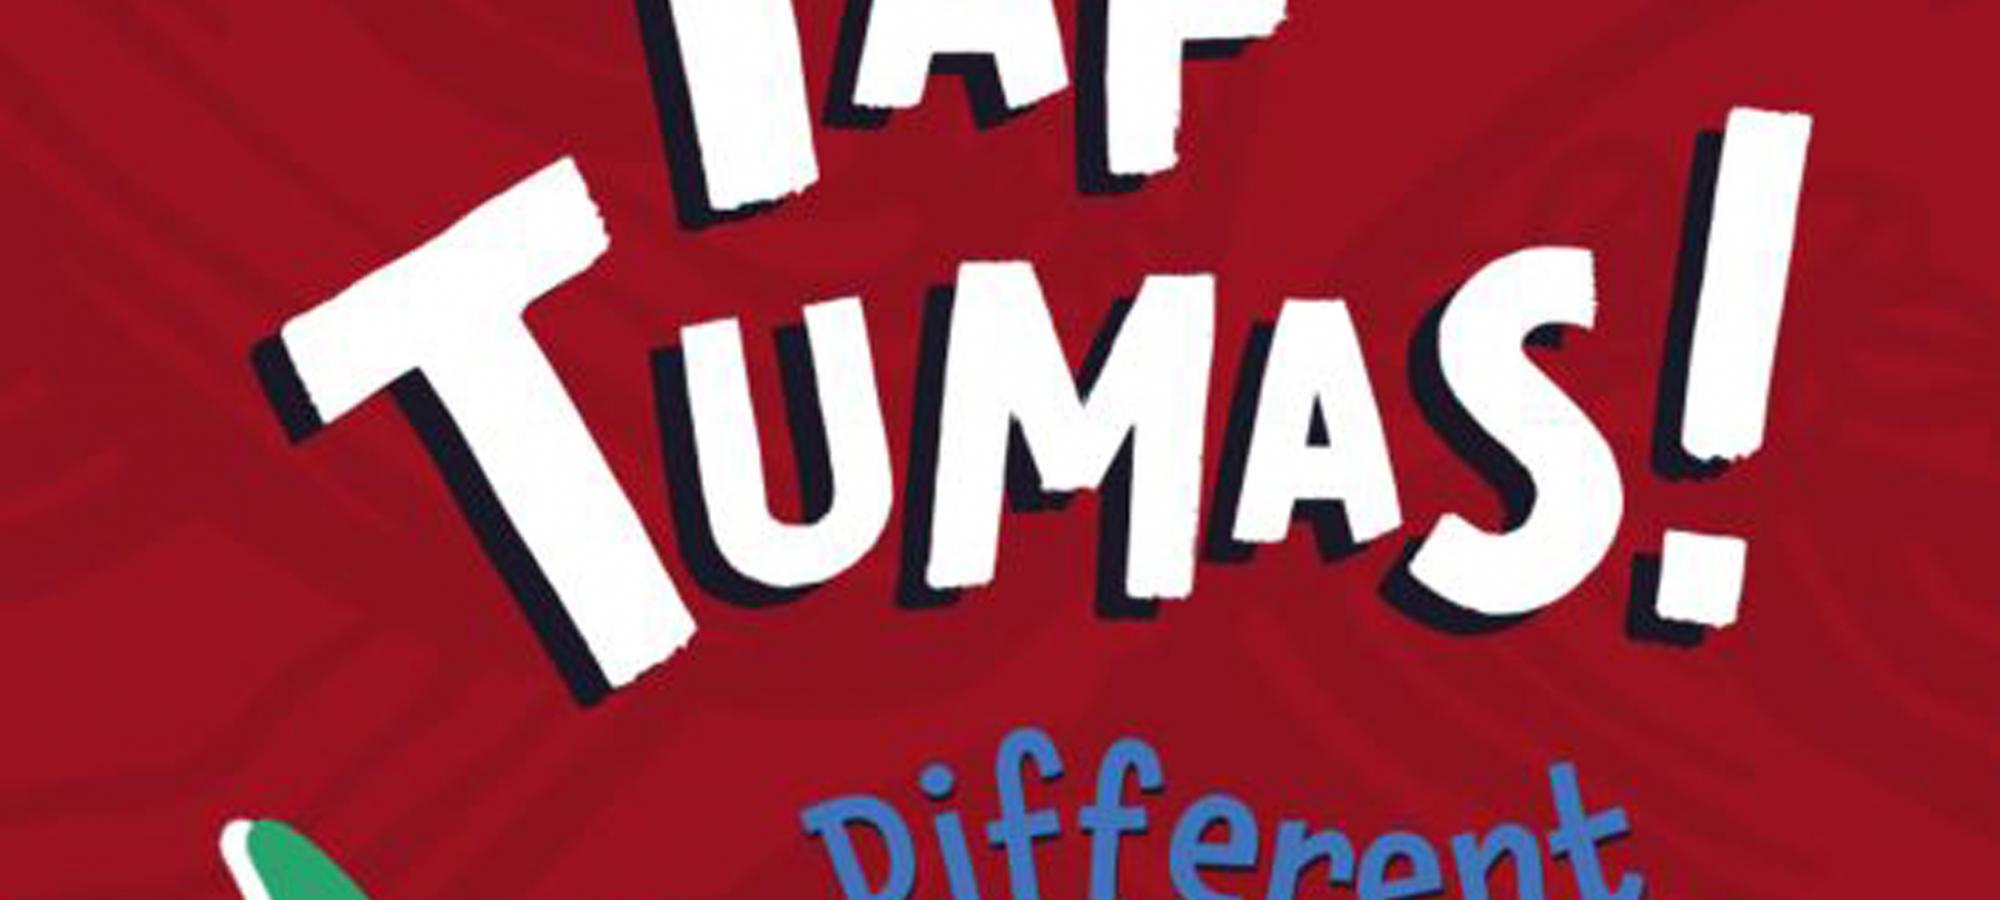 Taf Tumas! Different Journeys, One People